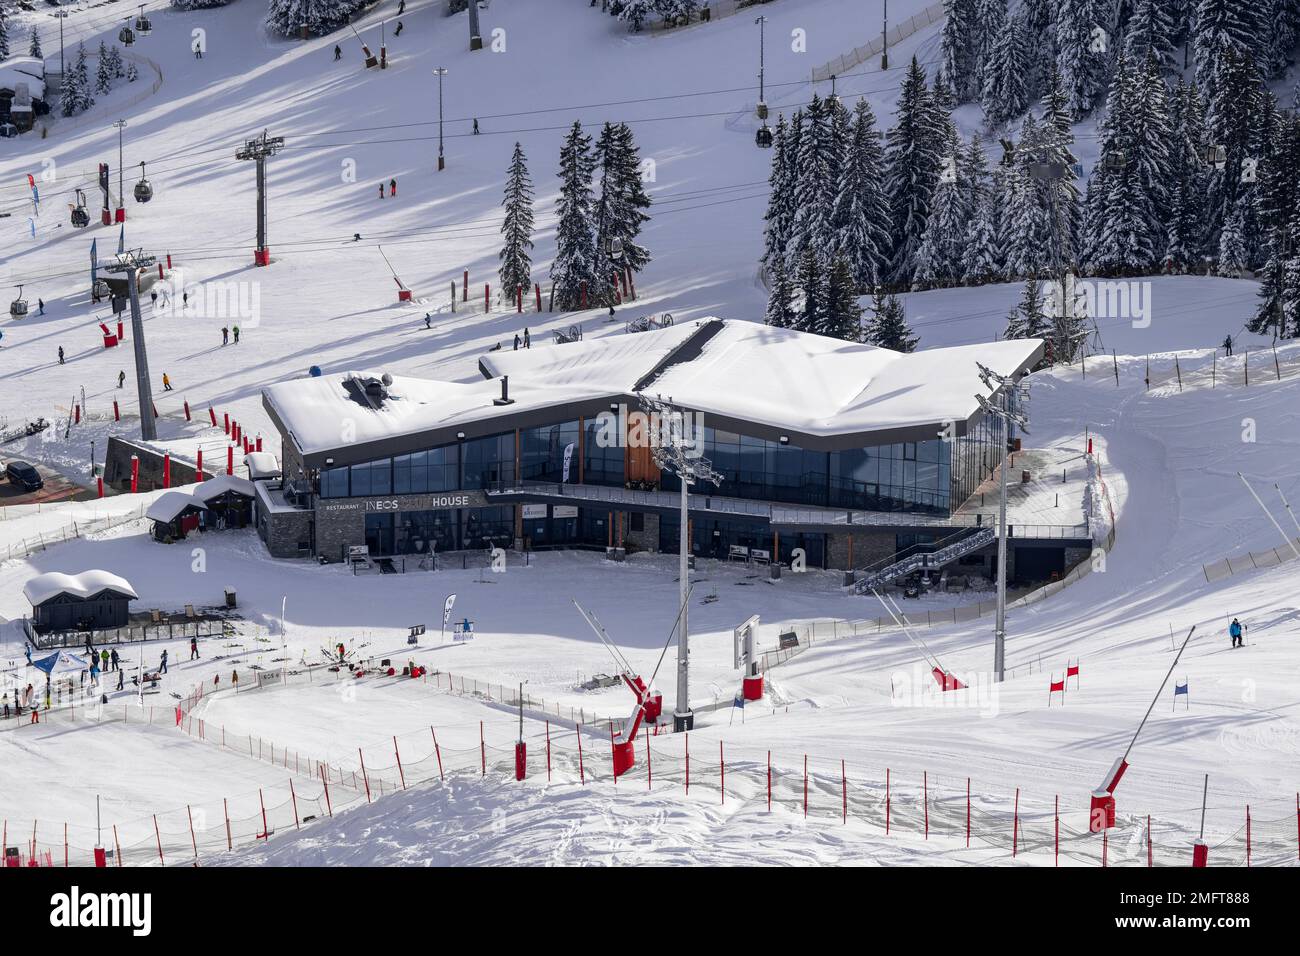 courchevel ski club